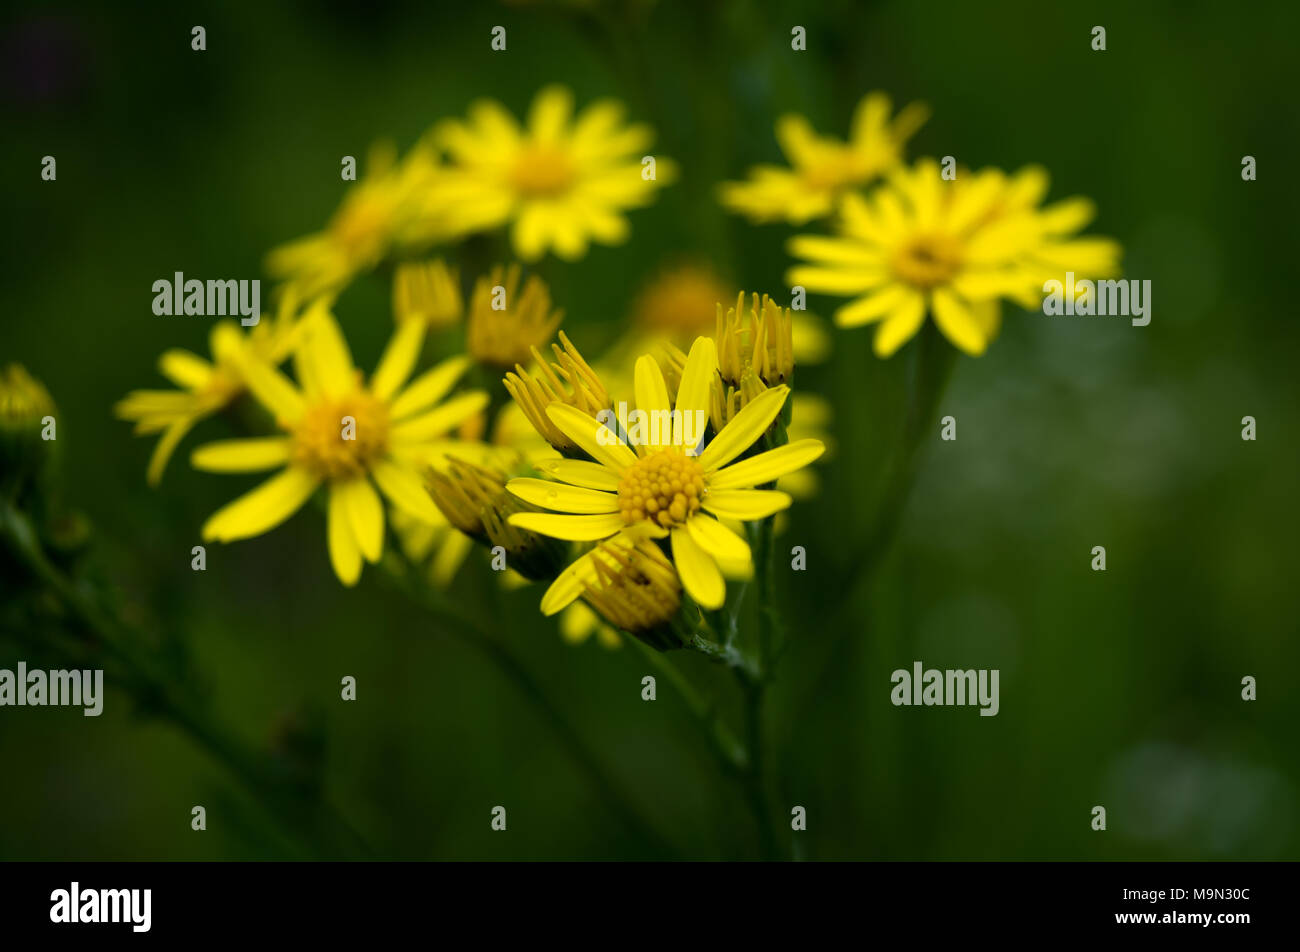 Beautiful yellow daisy flowers on dark background Stock Photo